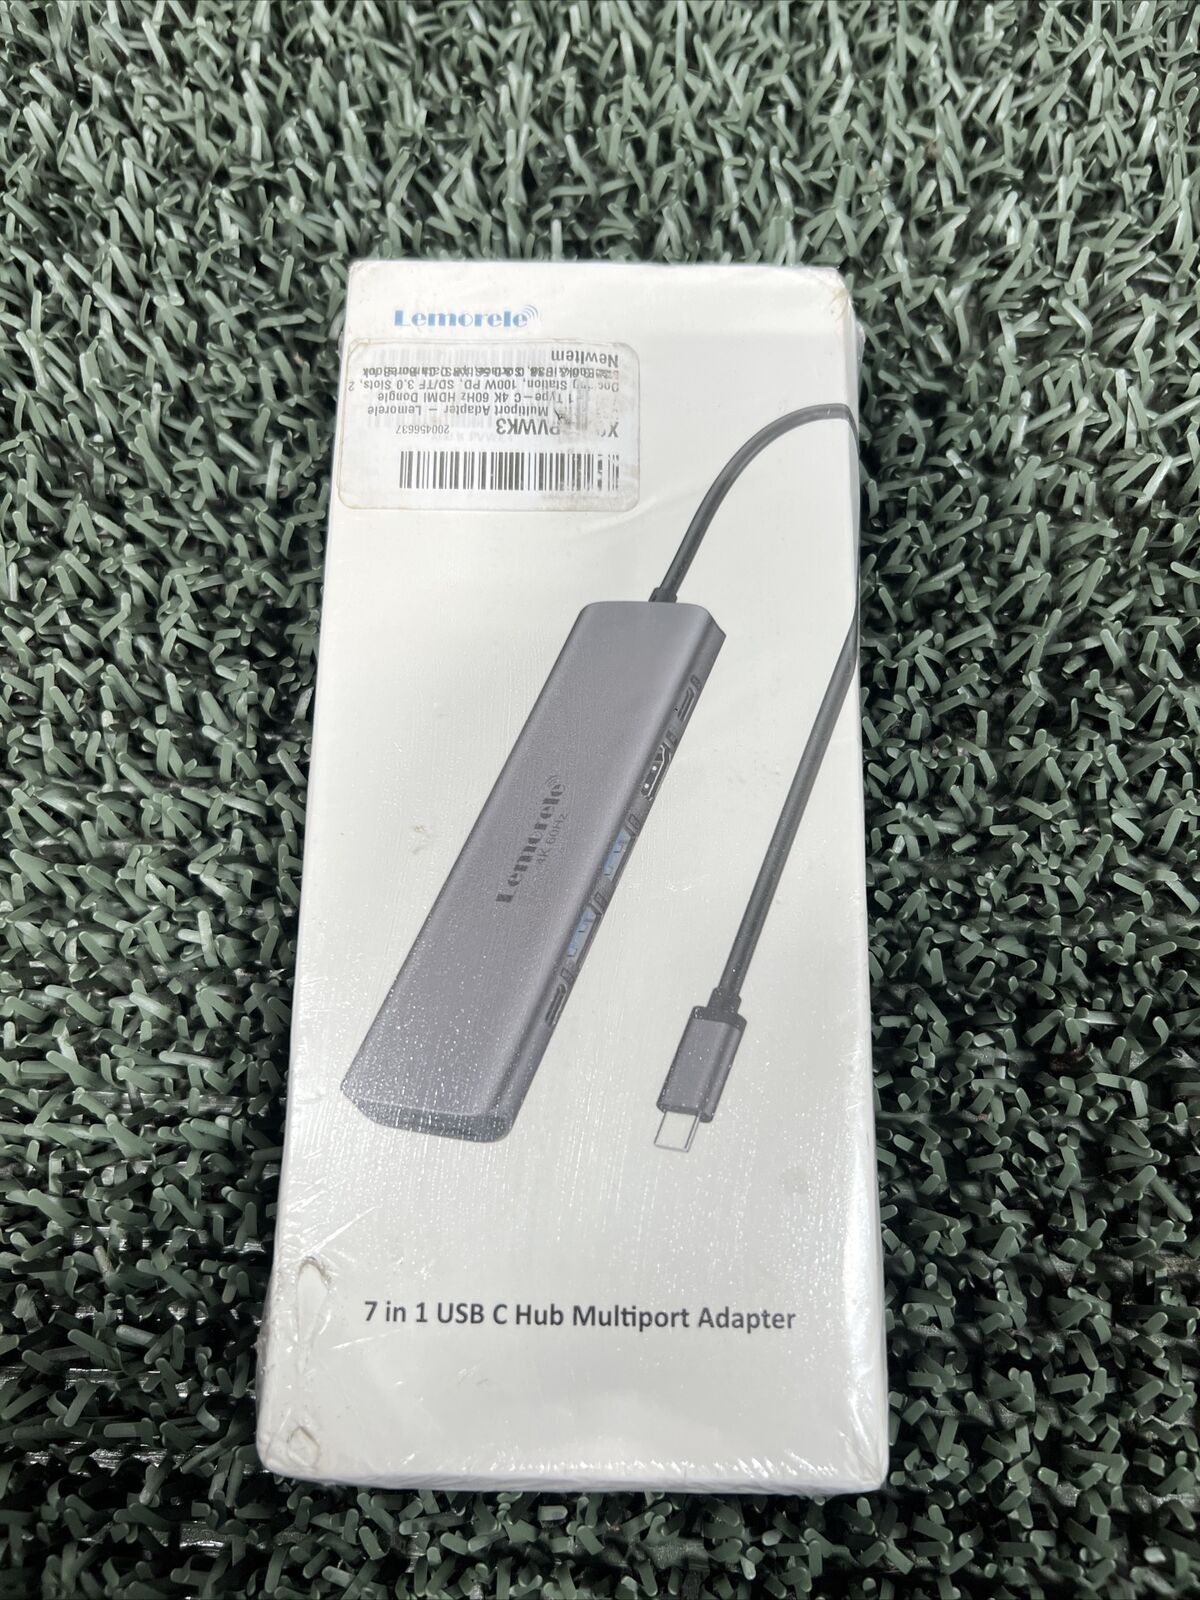 USB C Hub, Lemorele Type-C Hub Adapter 7 in 1 with HDMI 4K@30Hz, (#106)